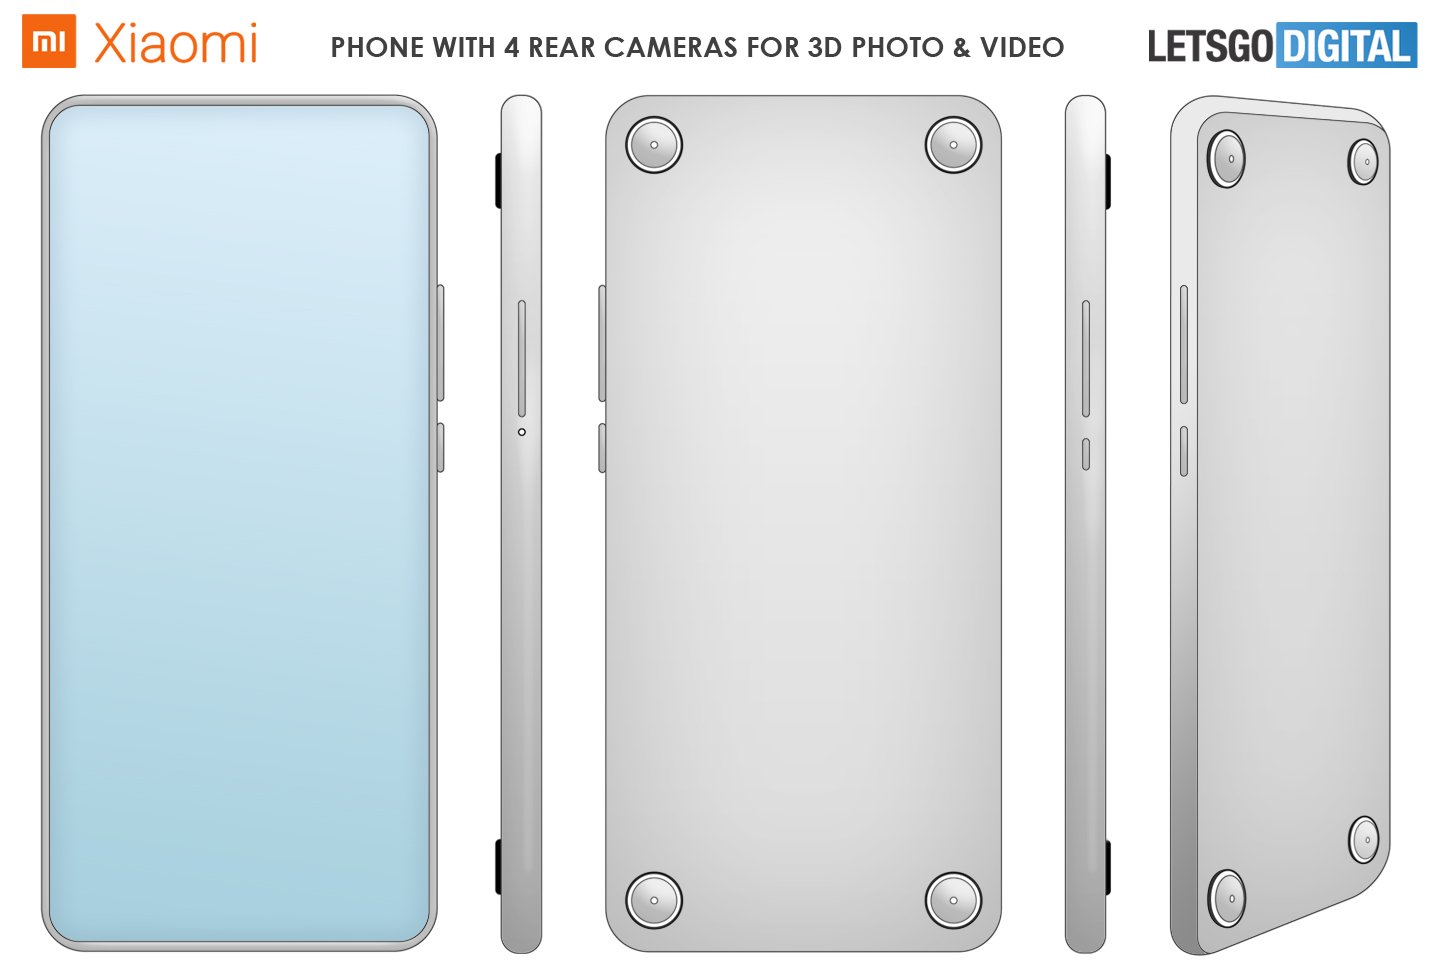 Skice paketa za dizajn Xiaomi 3D pametnog telefona